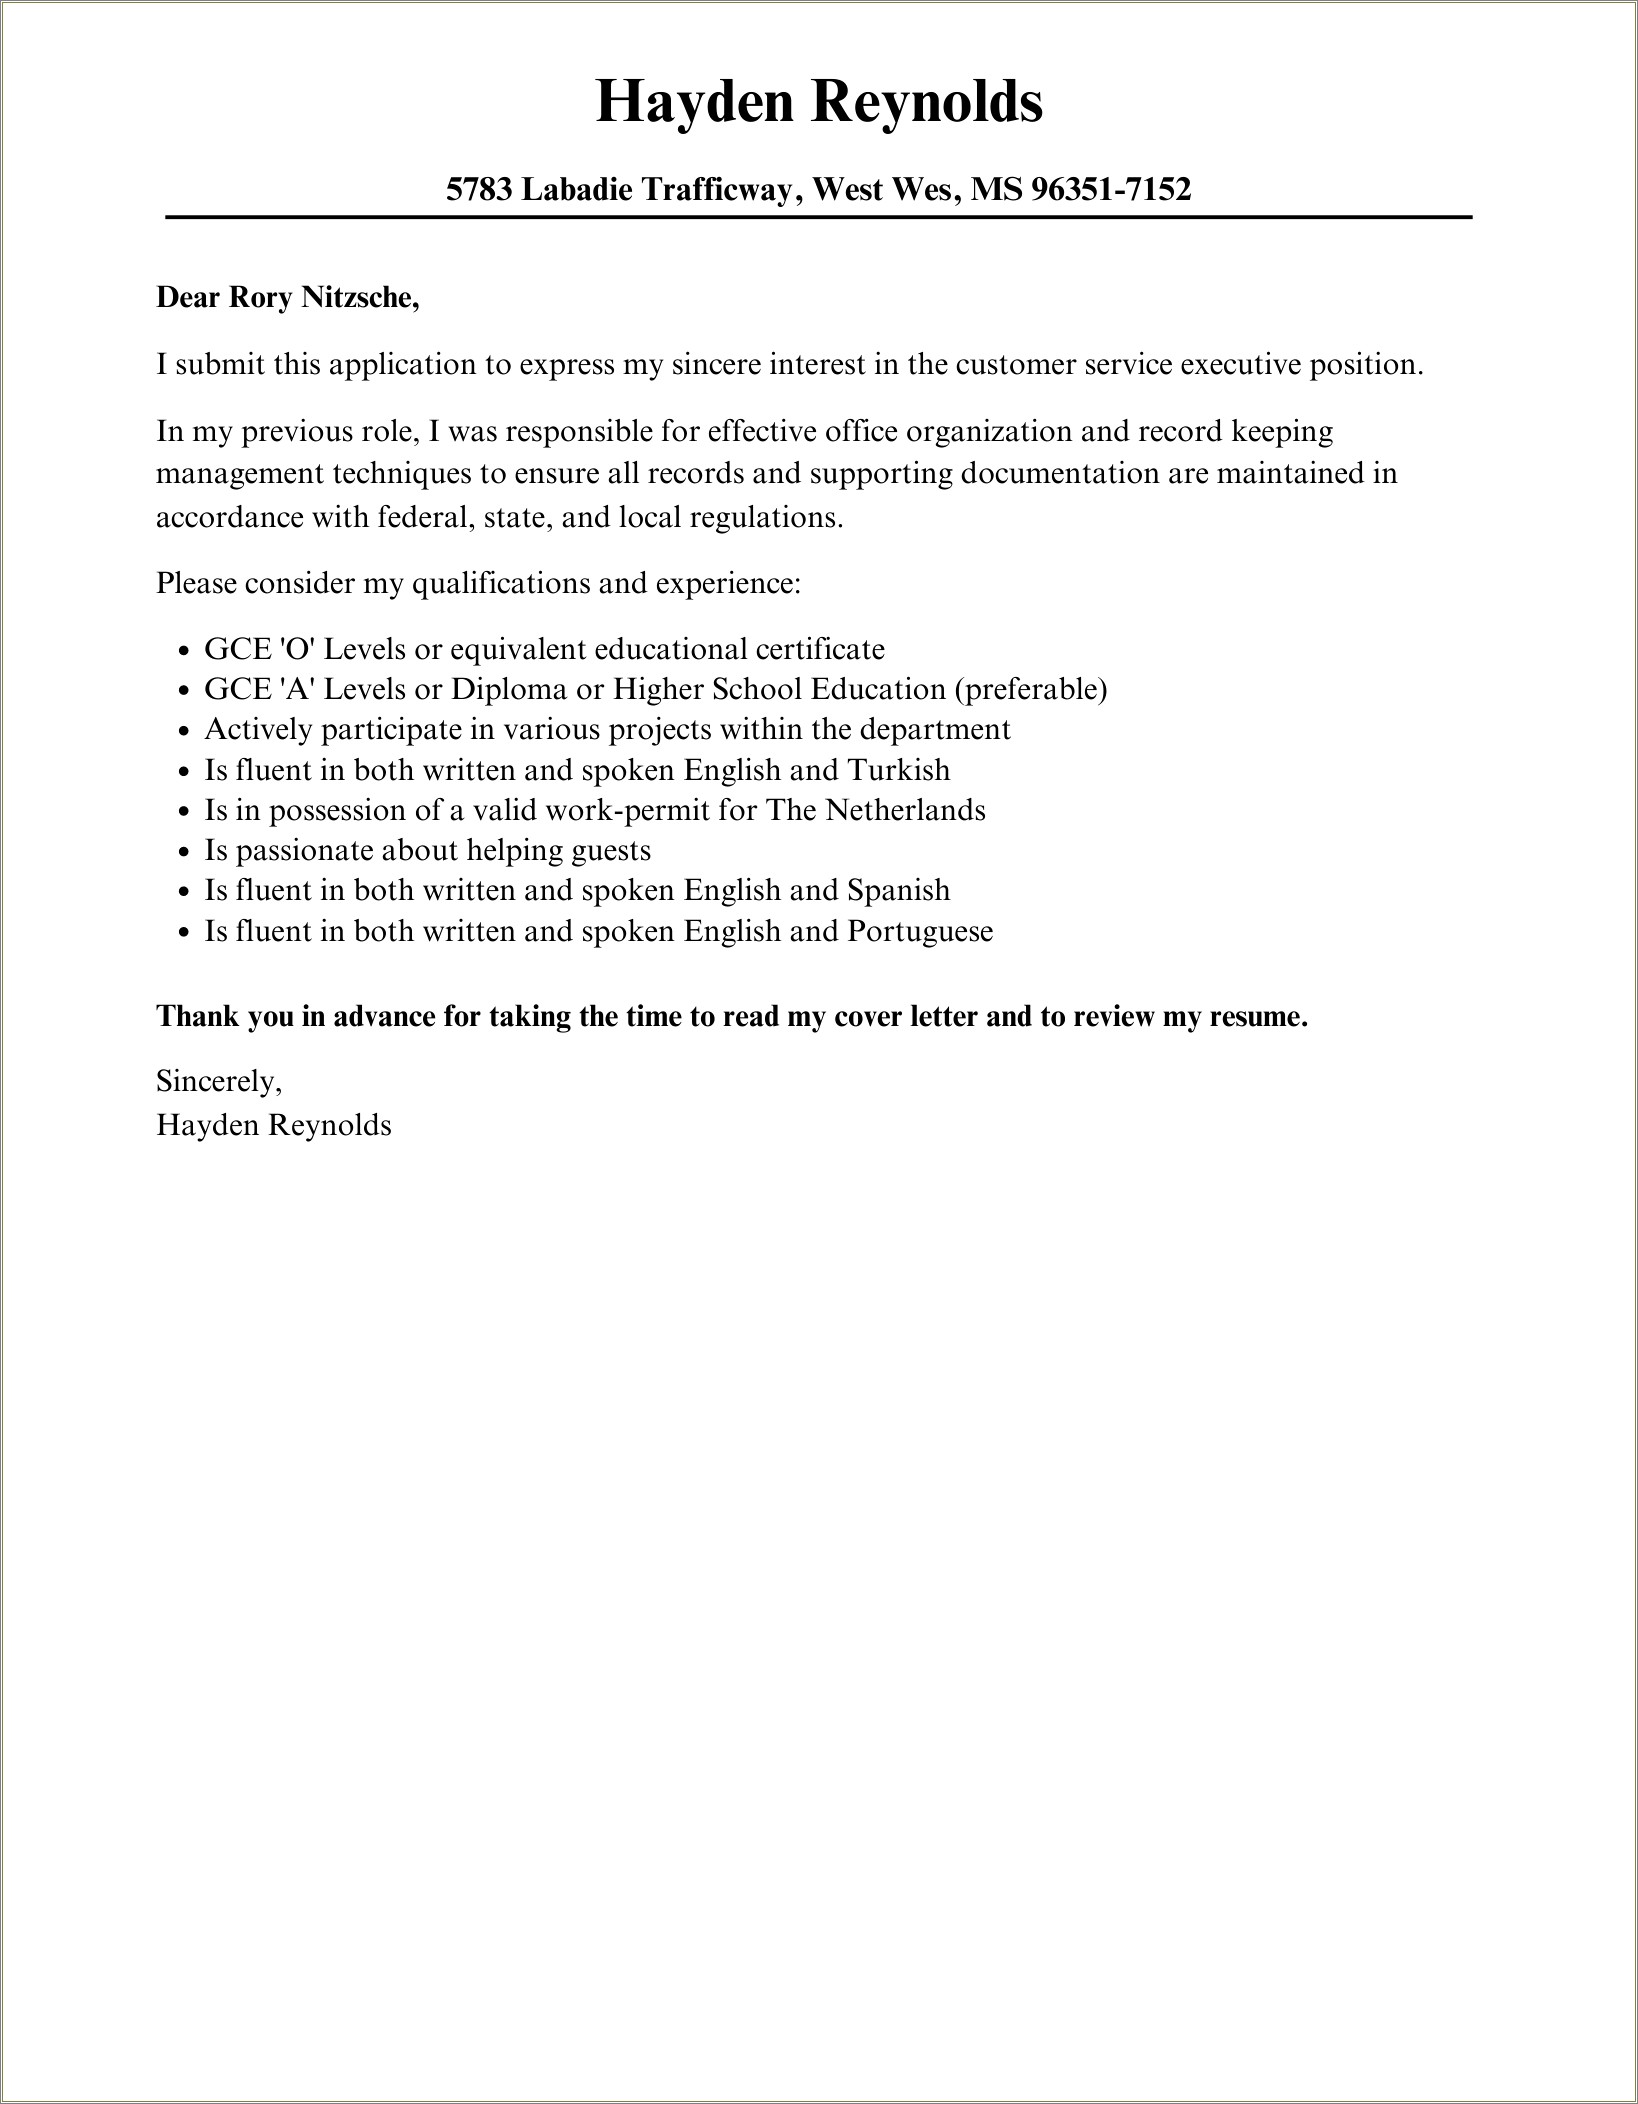 Resume Cover Letter For Customer Service Position